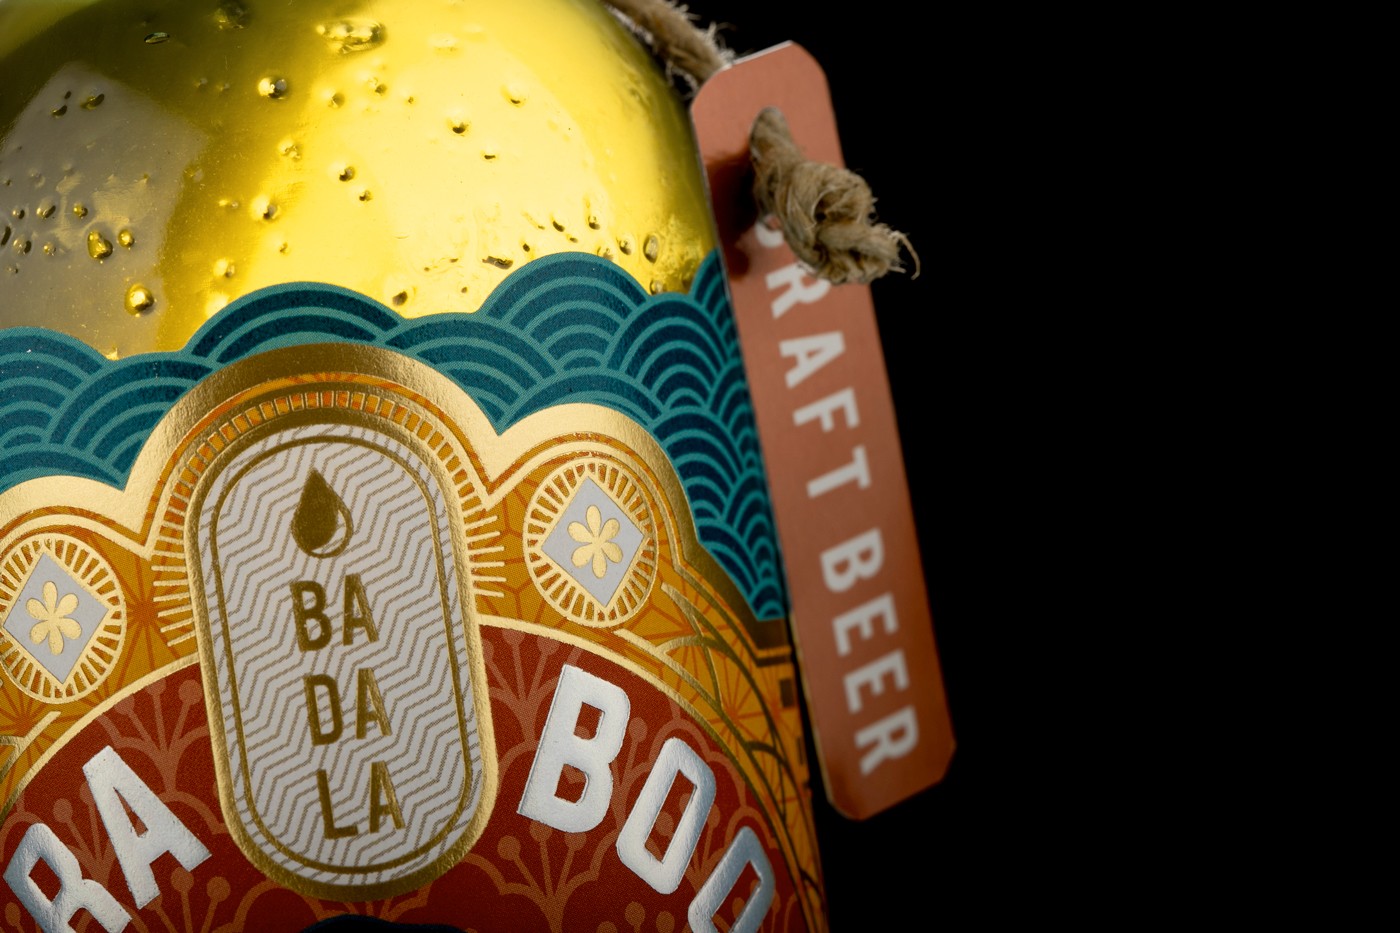 BADALA 精酿啤酒包装设计“波纹金箔浮雕装饰”风格